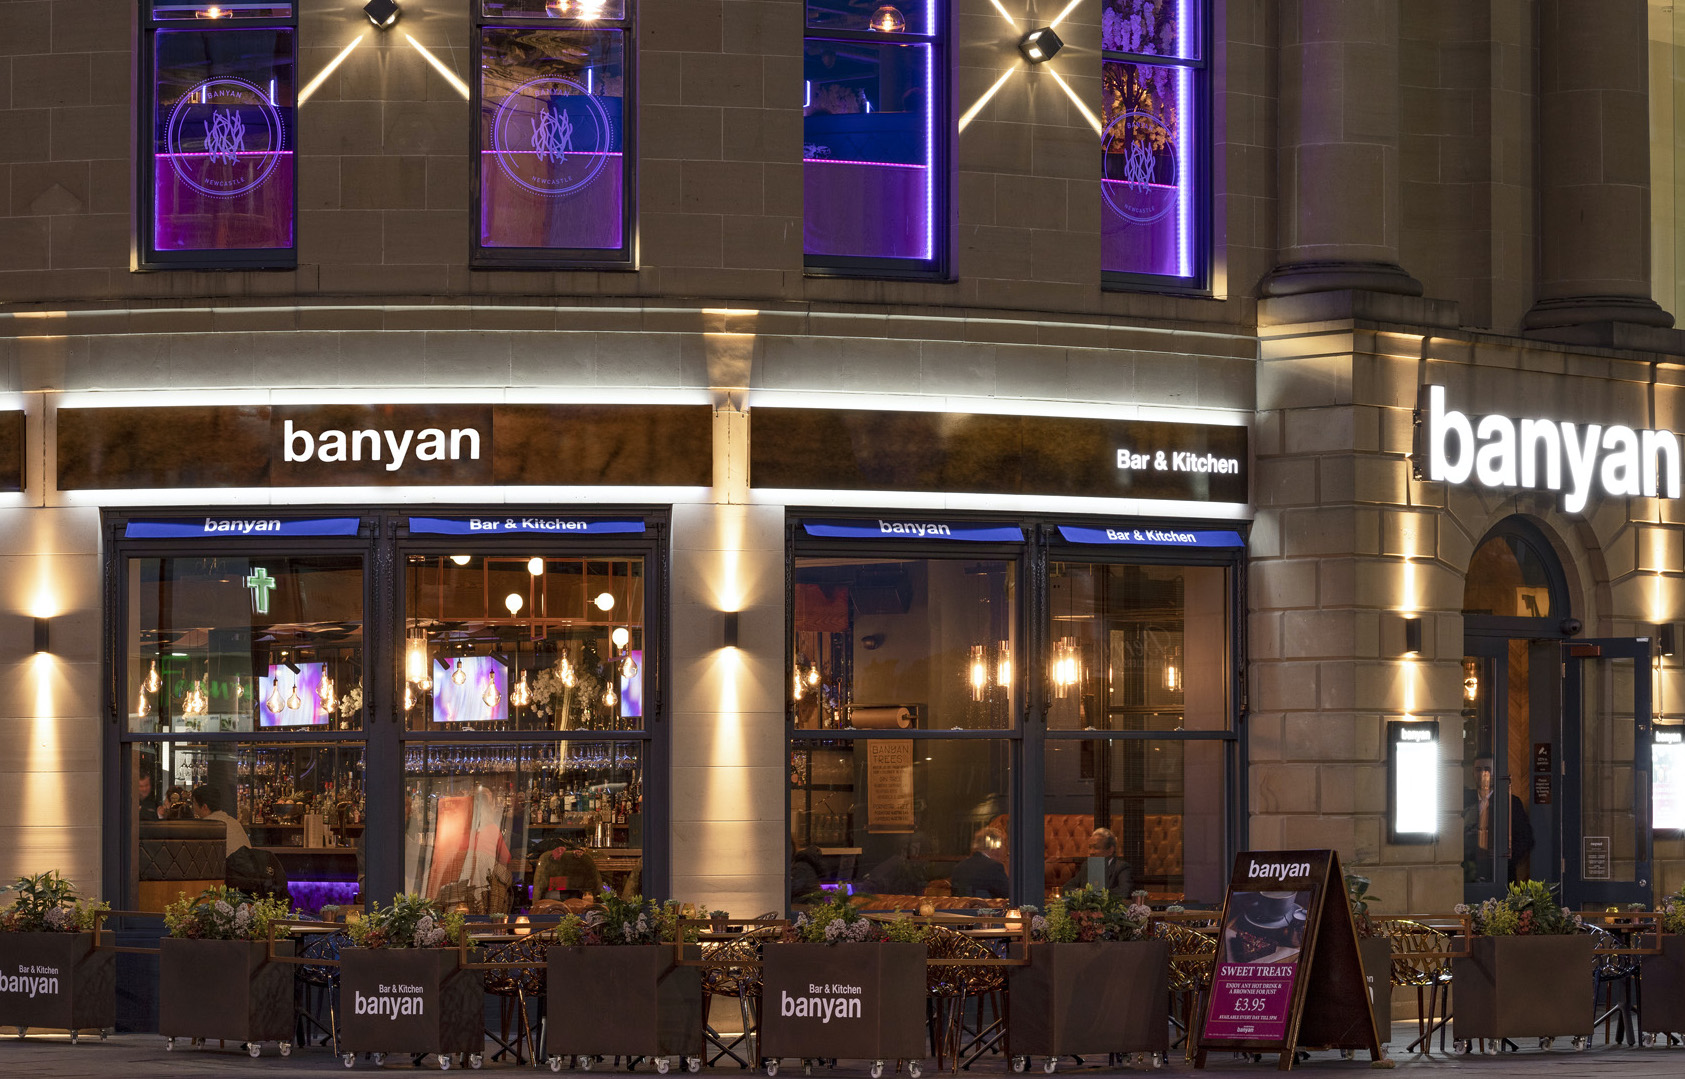 Banyan - Monument Mall on Wednesday 30th November